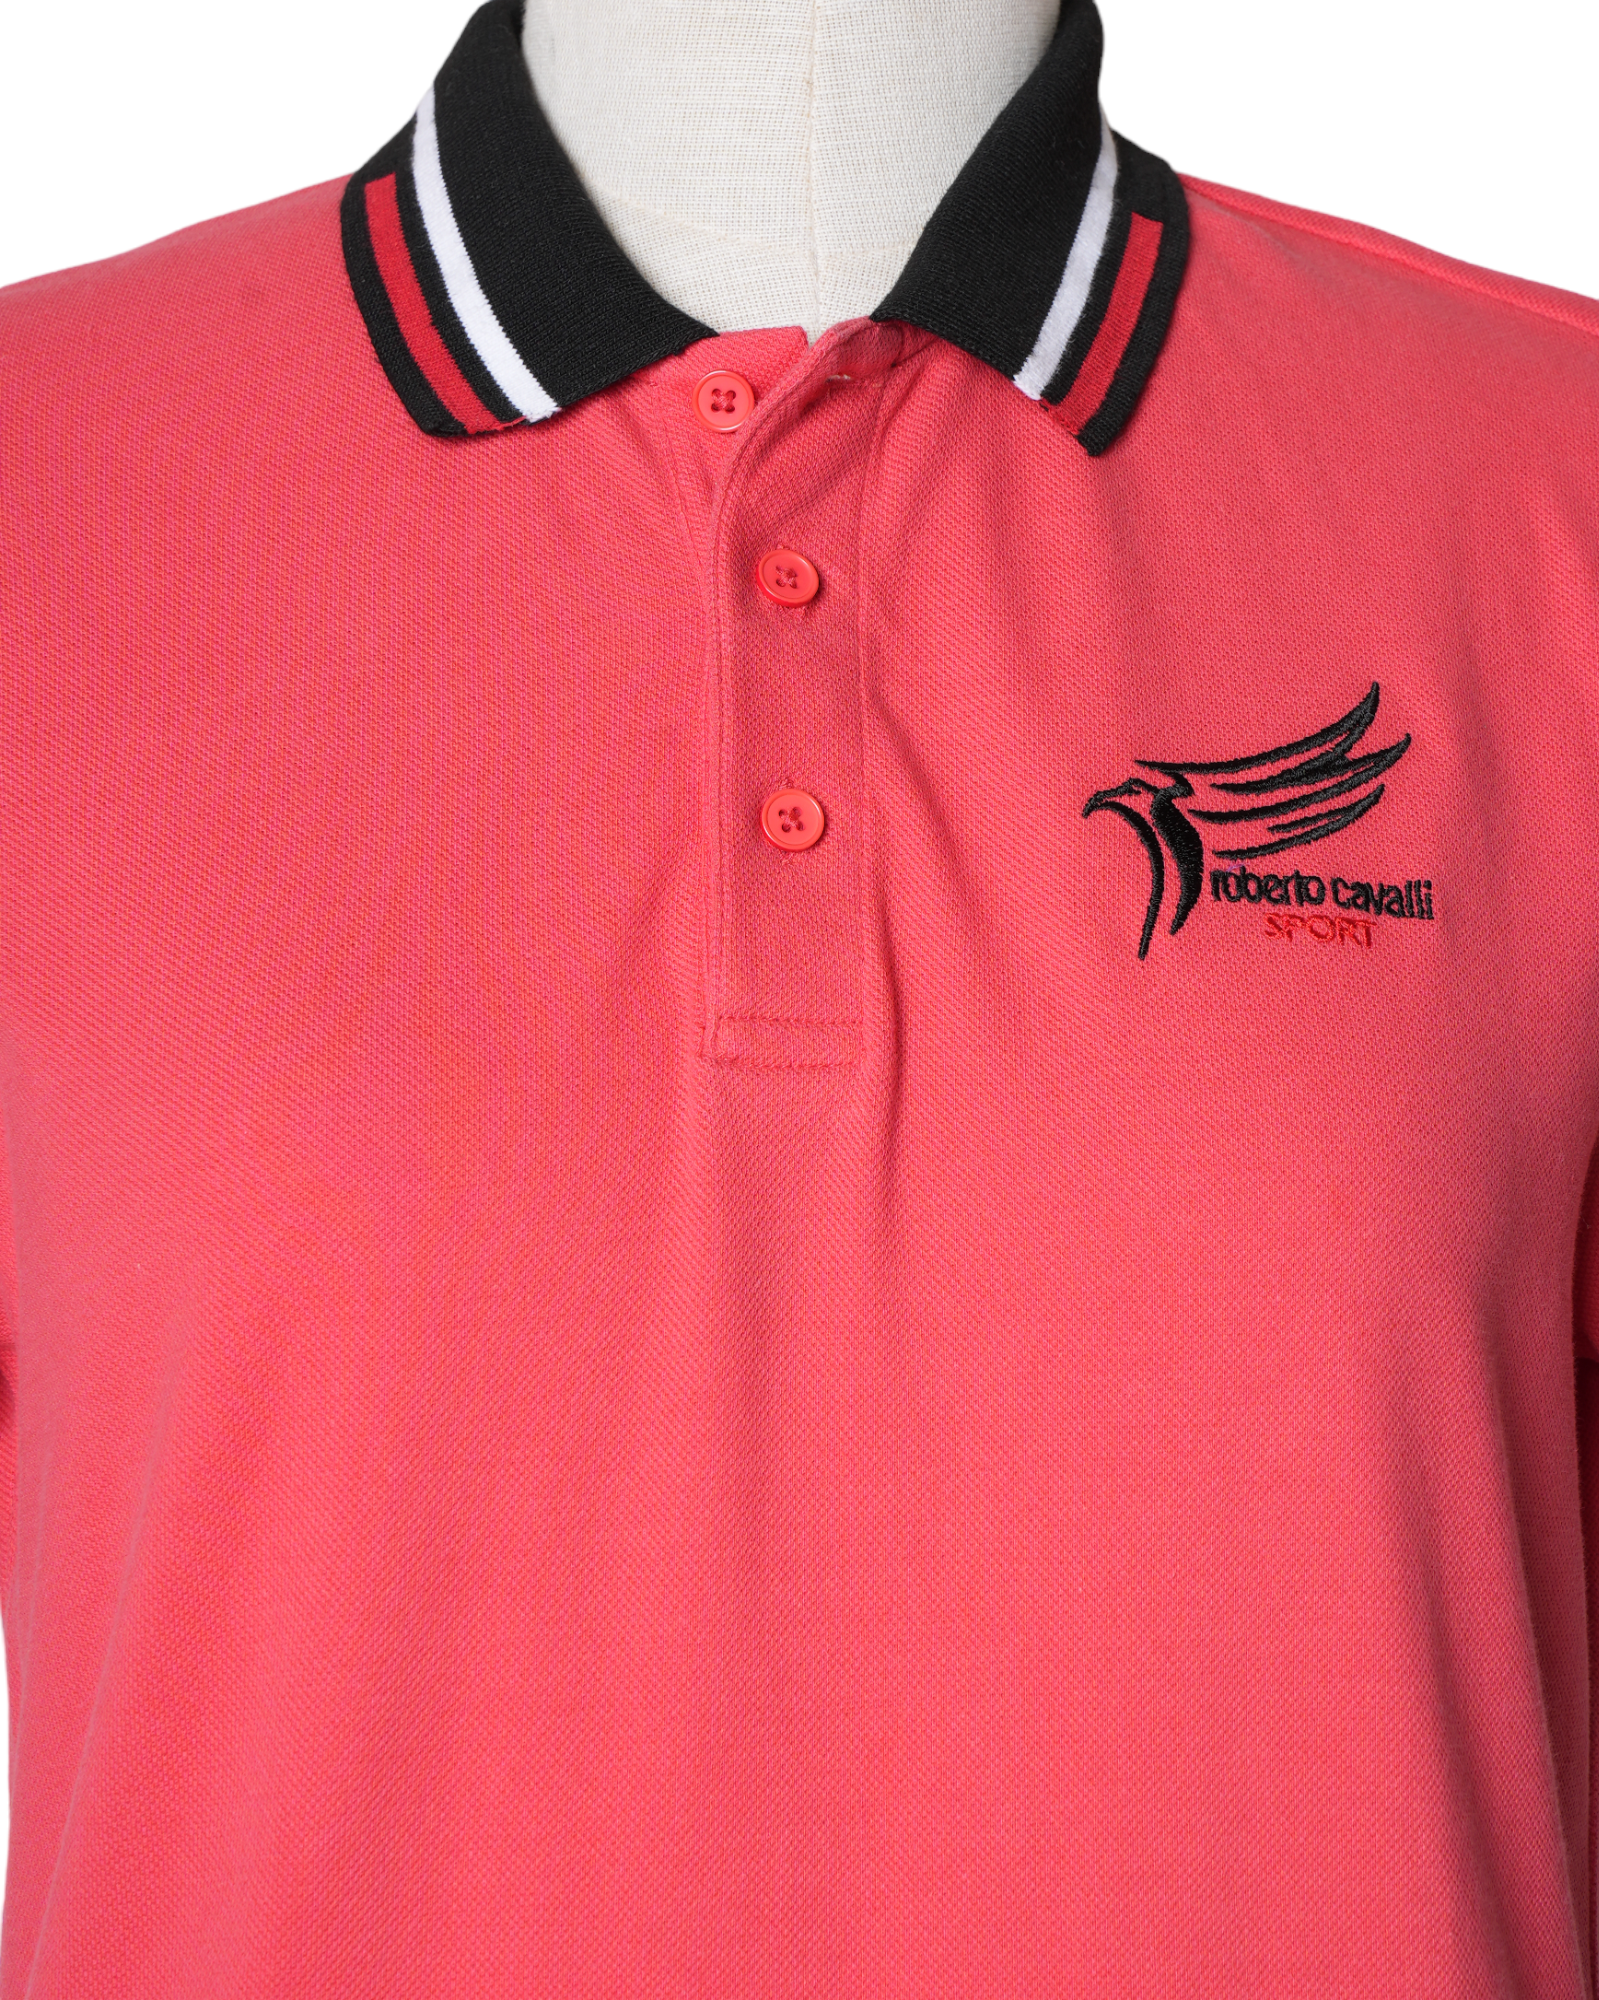 Roberto Cavalli Sport Red T-Shirt